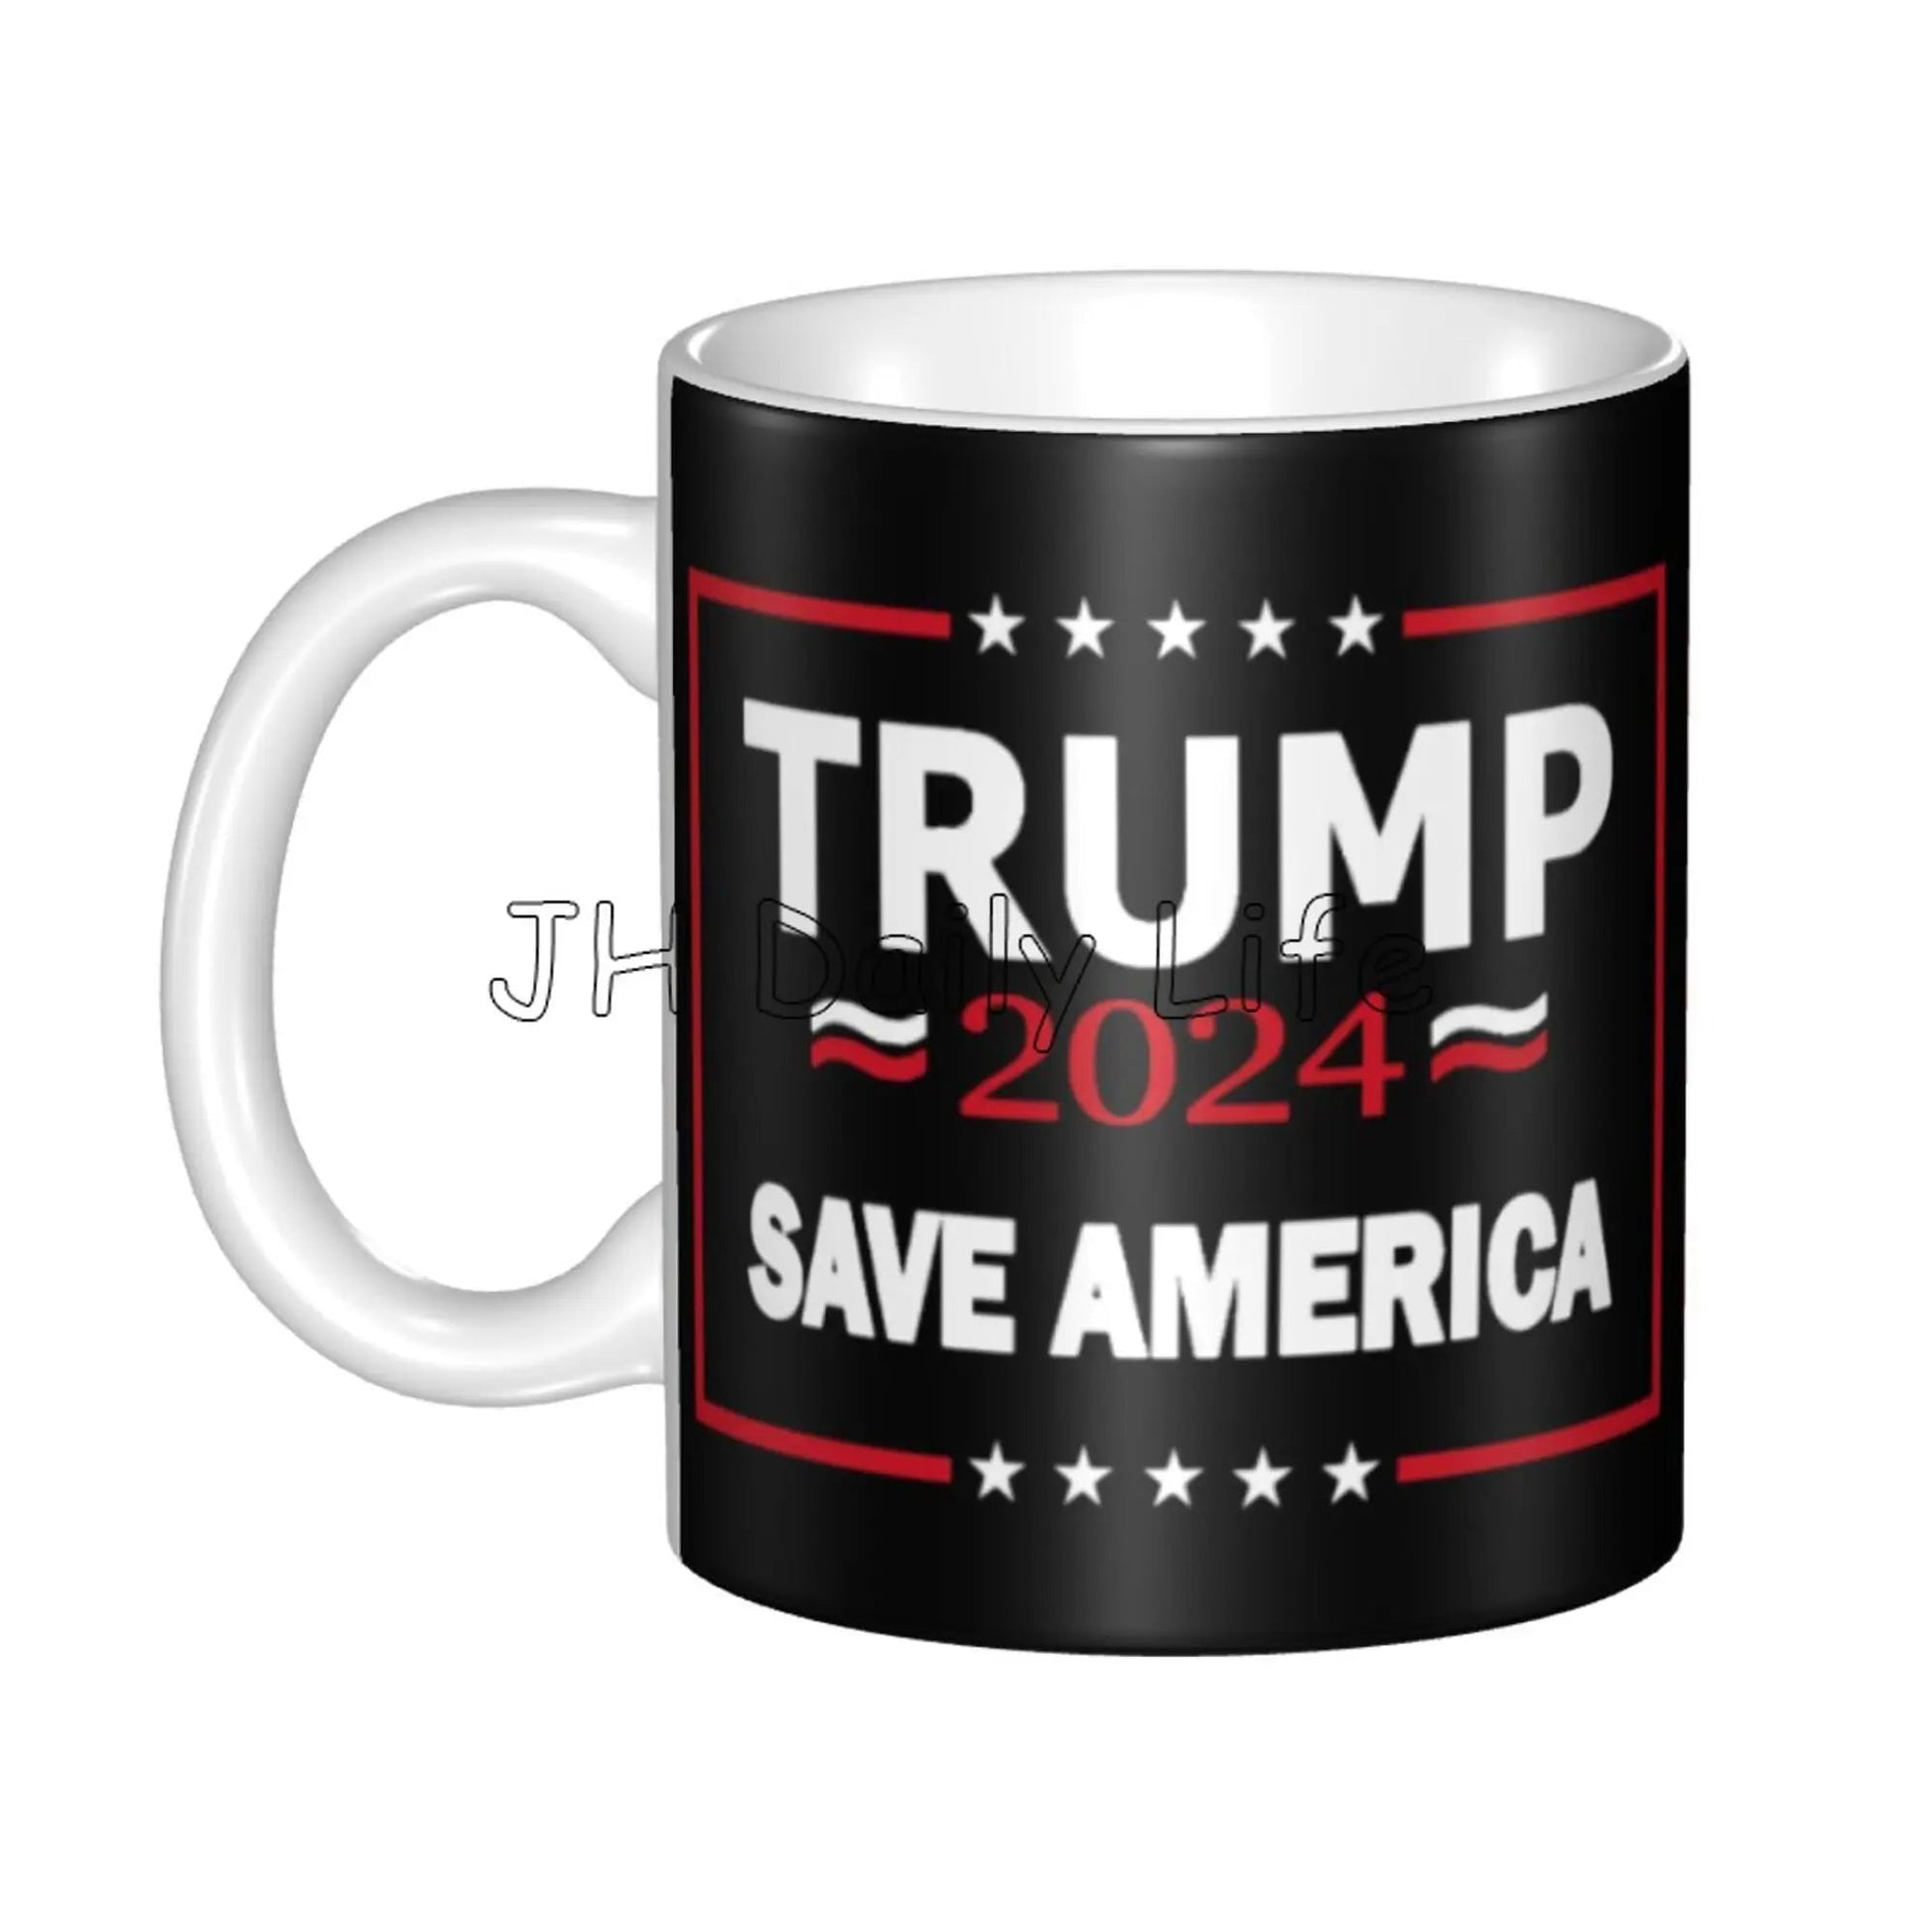 Trump Save America Again 2024 Coffee Mug - 11 Oz White Ceramic - Great Again Donald